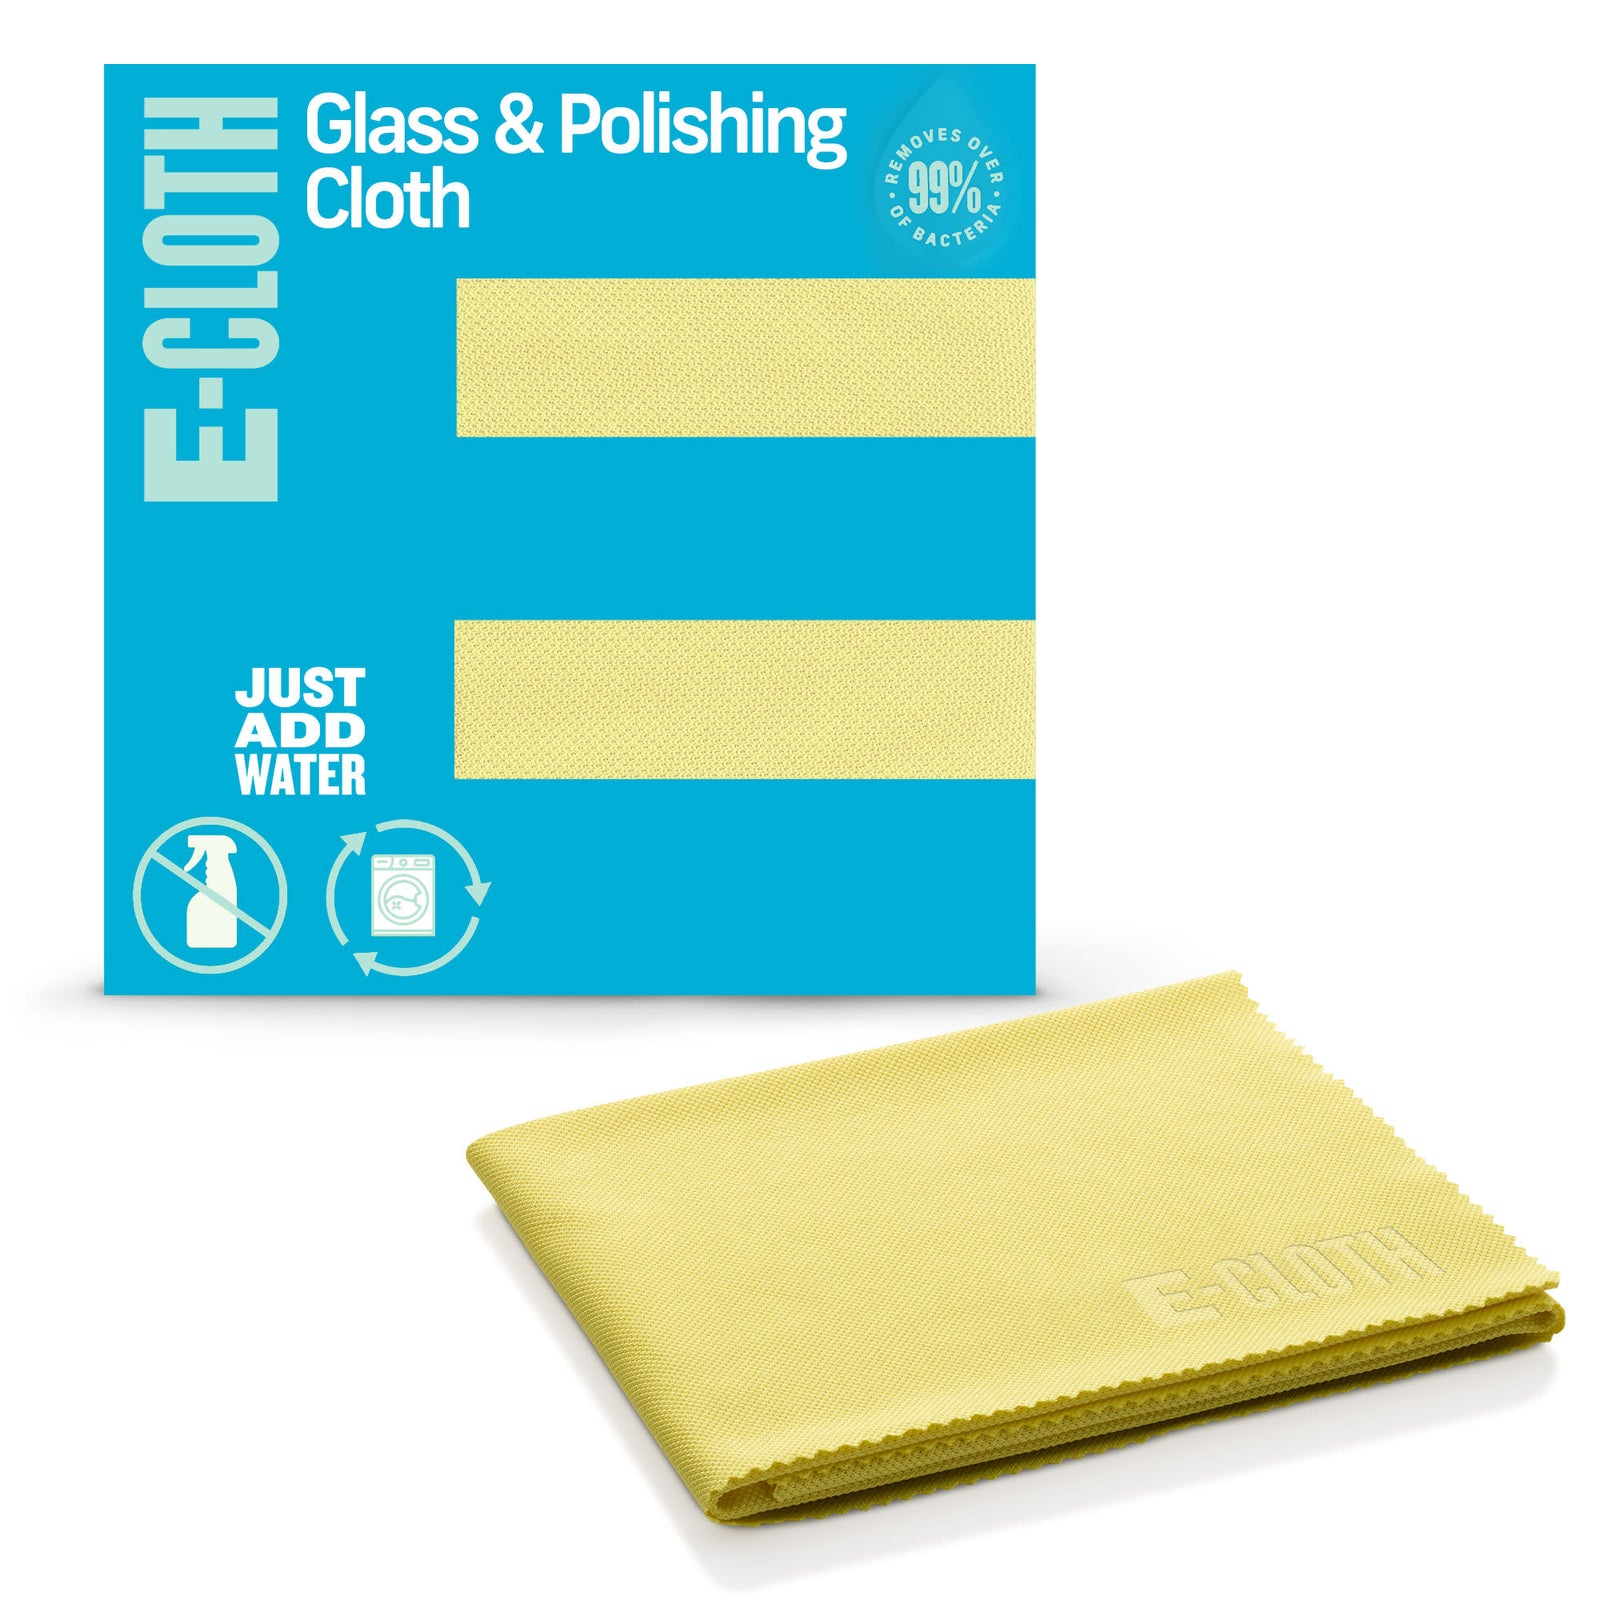 E-Cloth Microfiber Glass & Polishing Cloths - Assorted Colors - 4 Pack